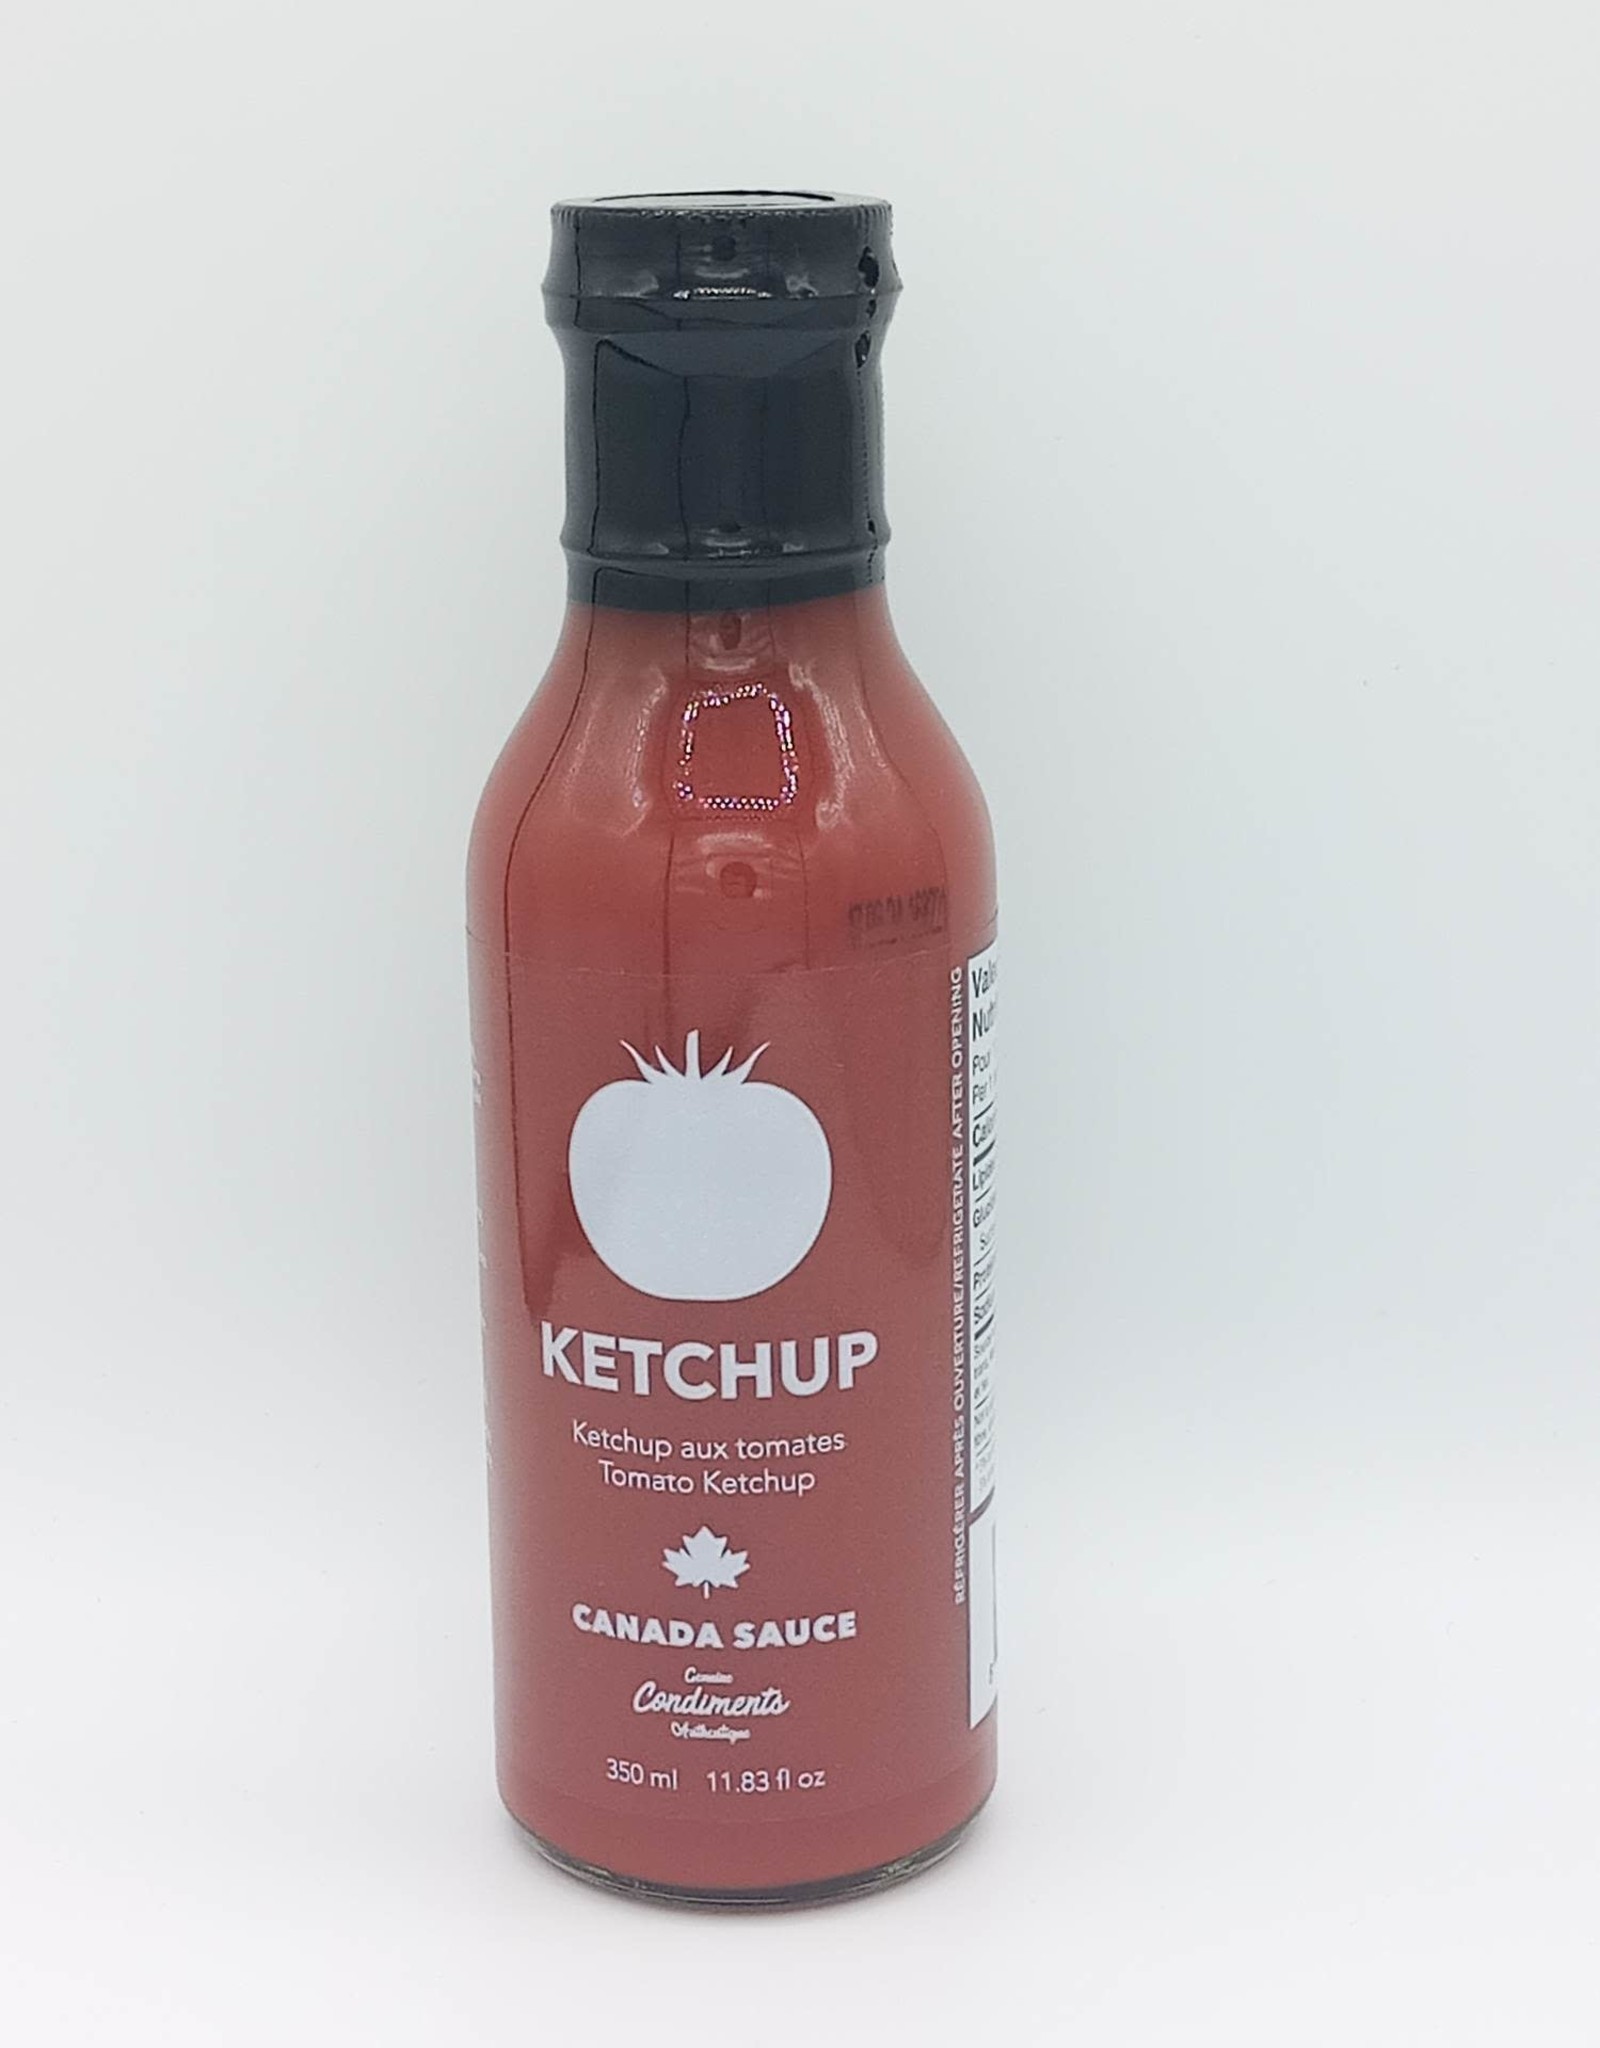 Canada Sauce Canada Sauce Authentique - Ketchup Naturel Authentique (350g)